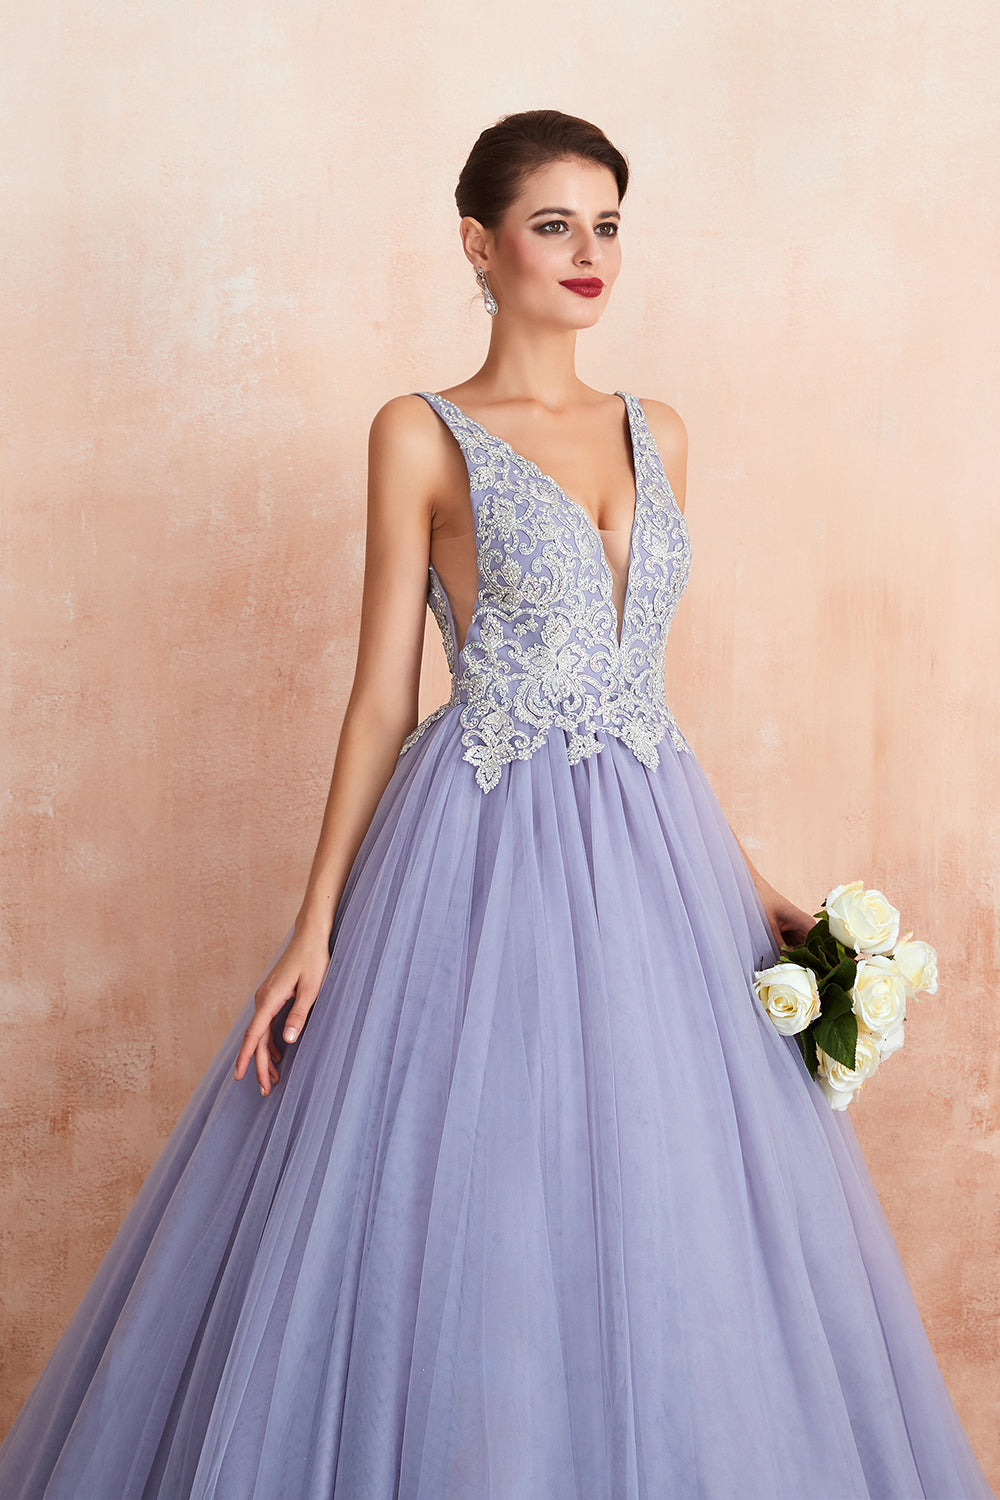 Excellent Long Princess V-neck Sleeveless Tulle Backless Prom Dress-27dress